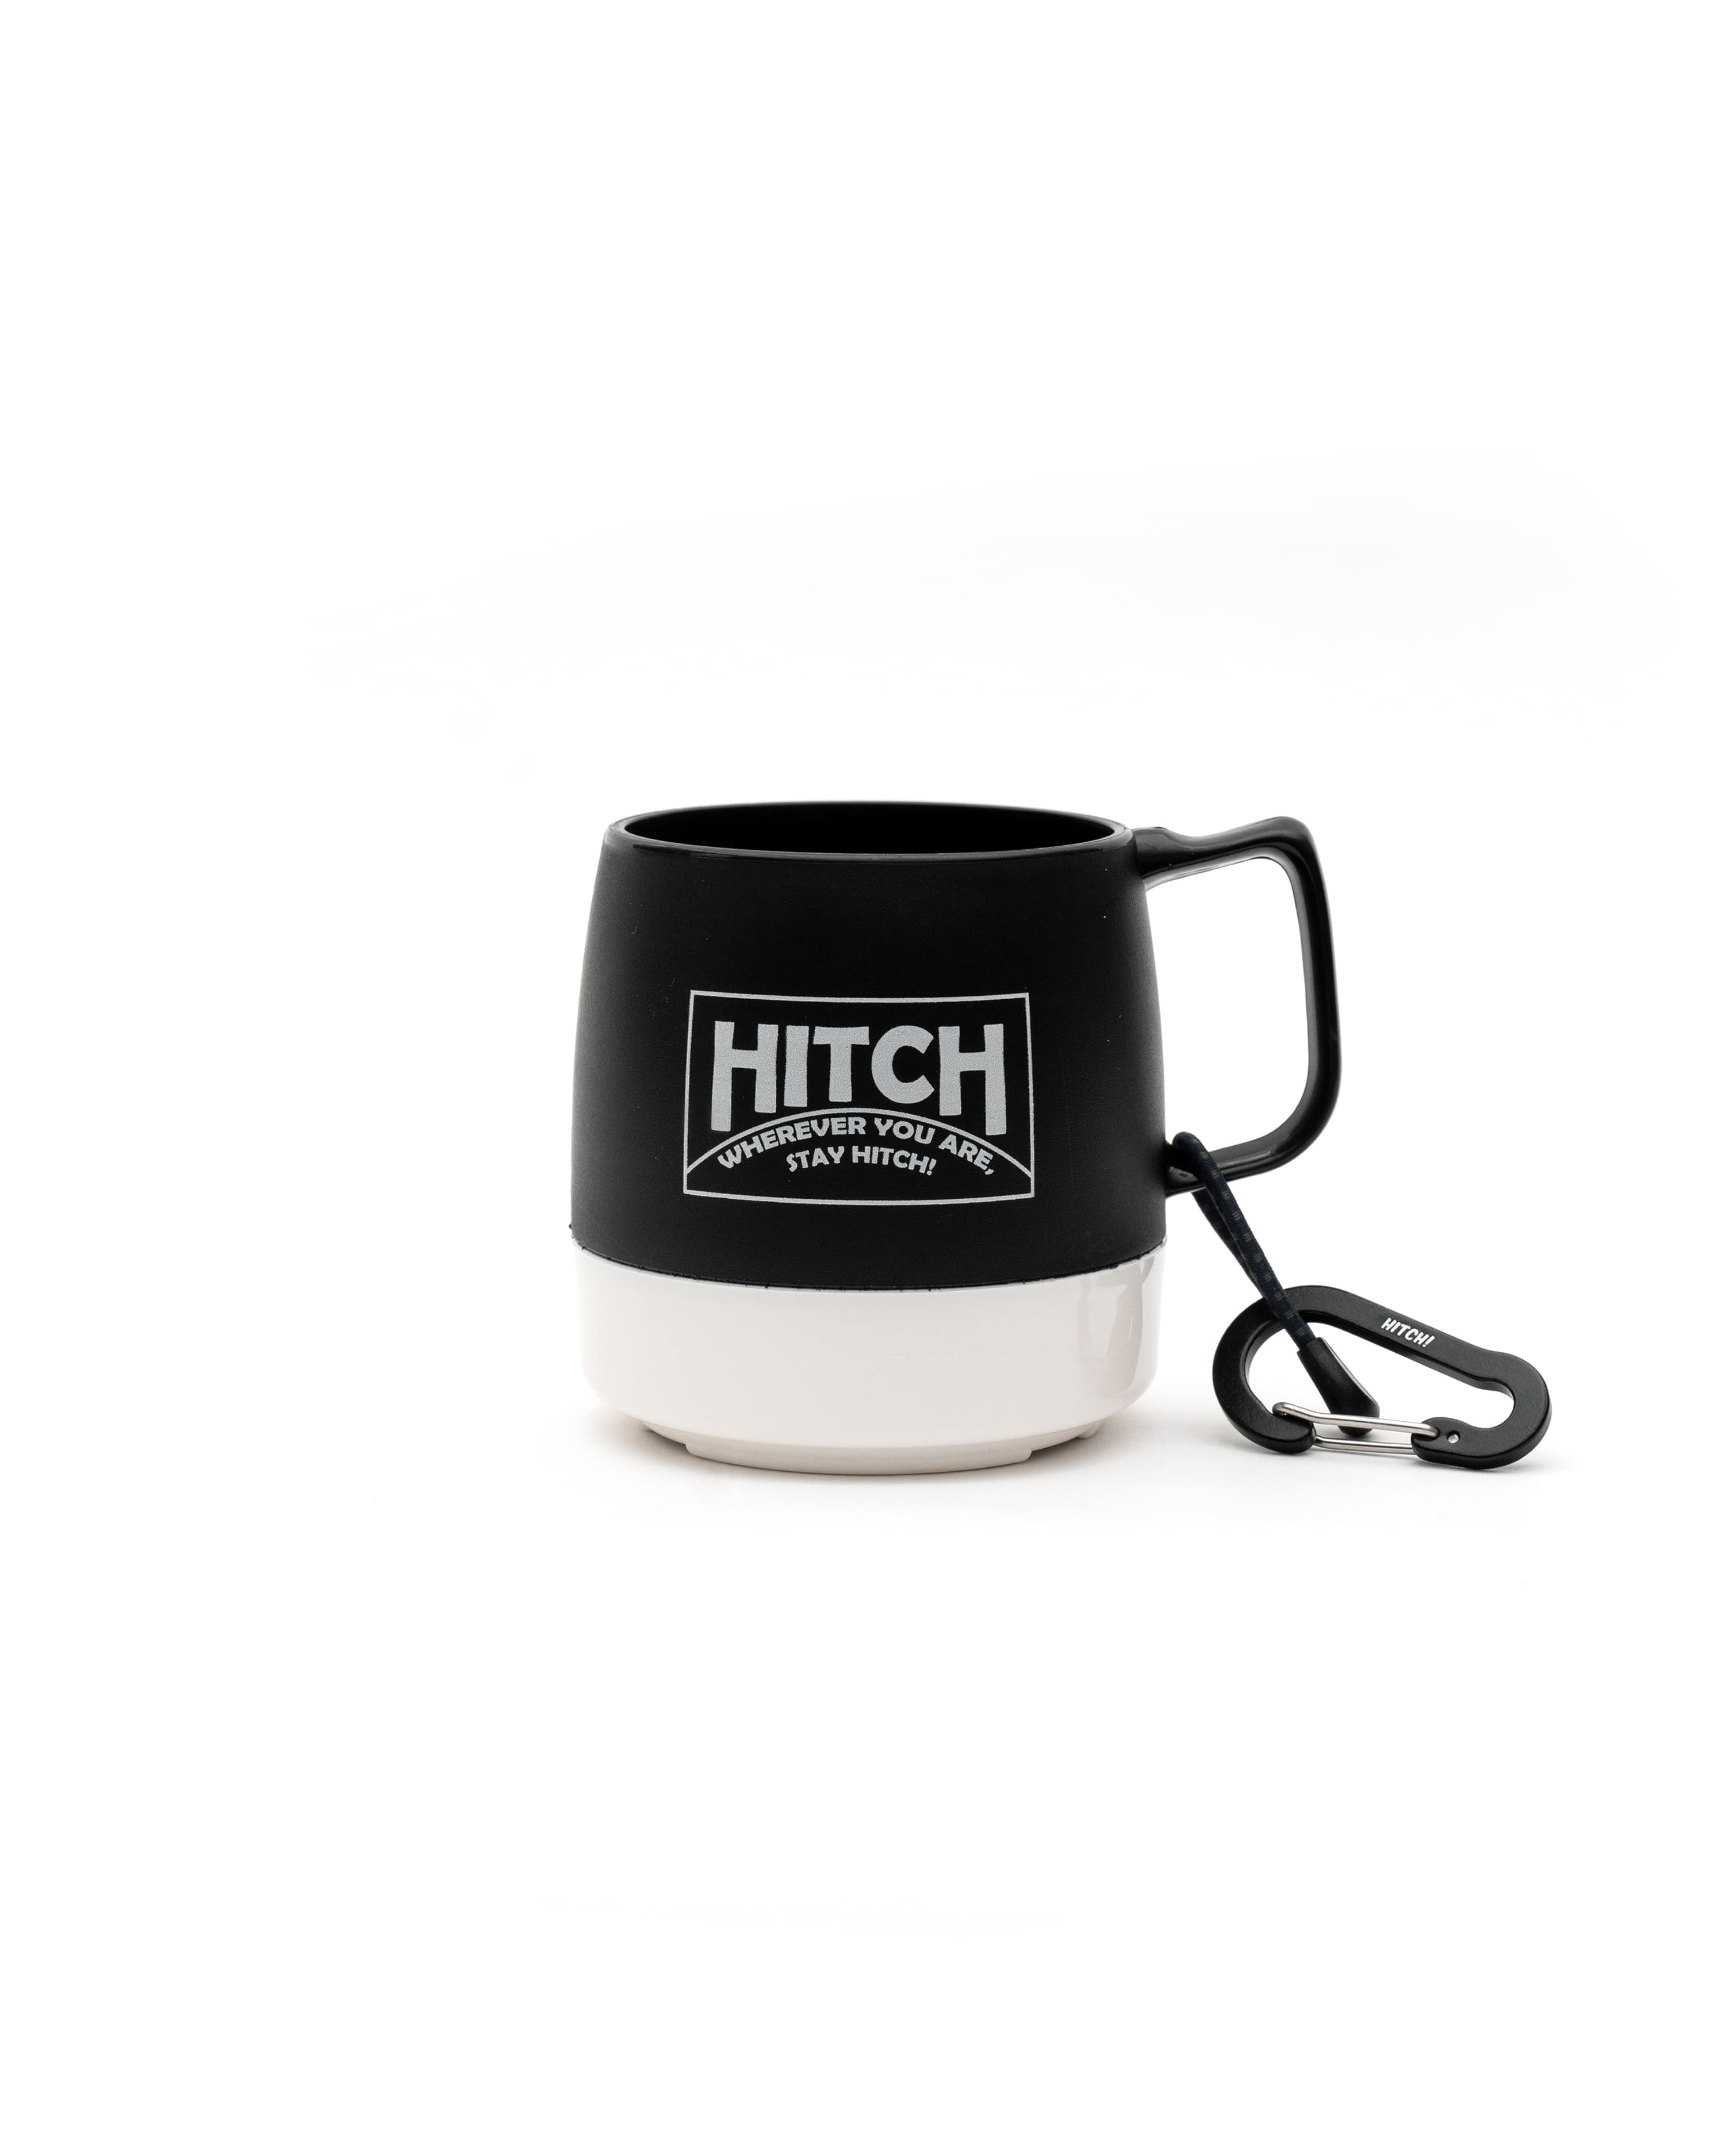 [out of stock] hitch x dinex 8oz mug - black/white